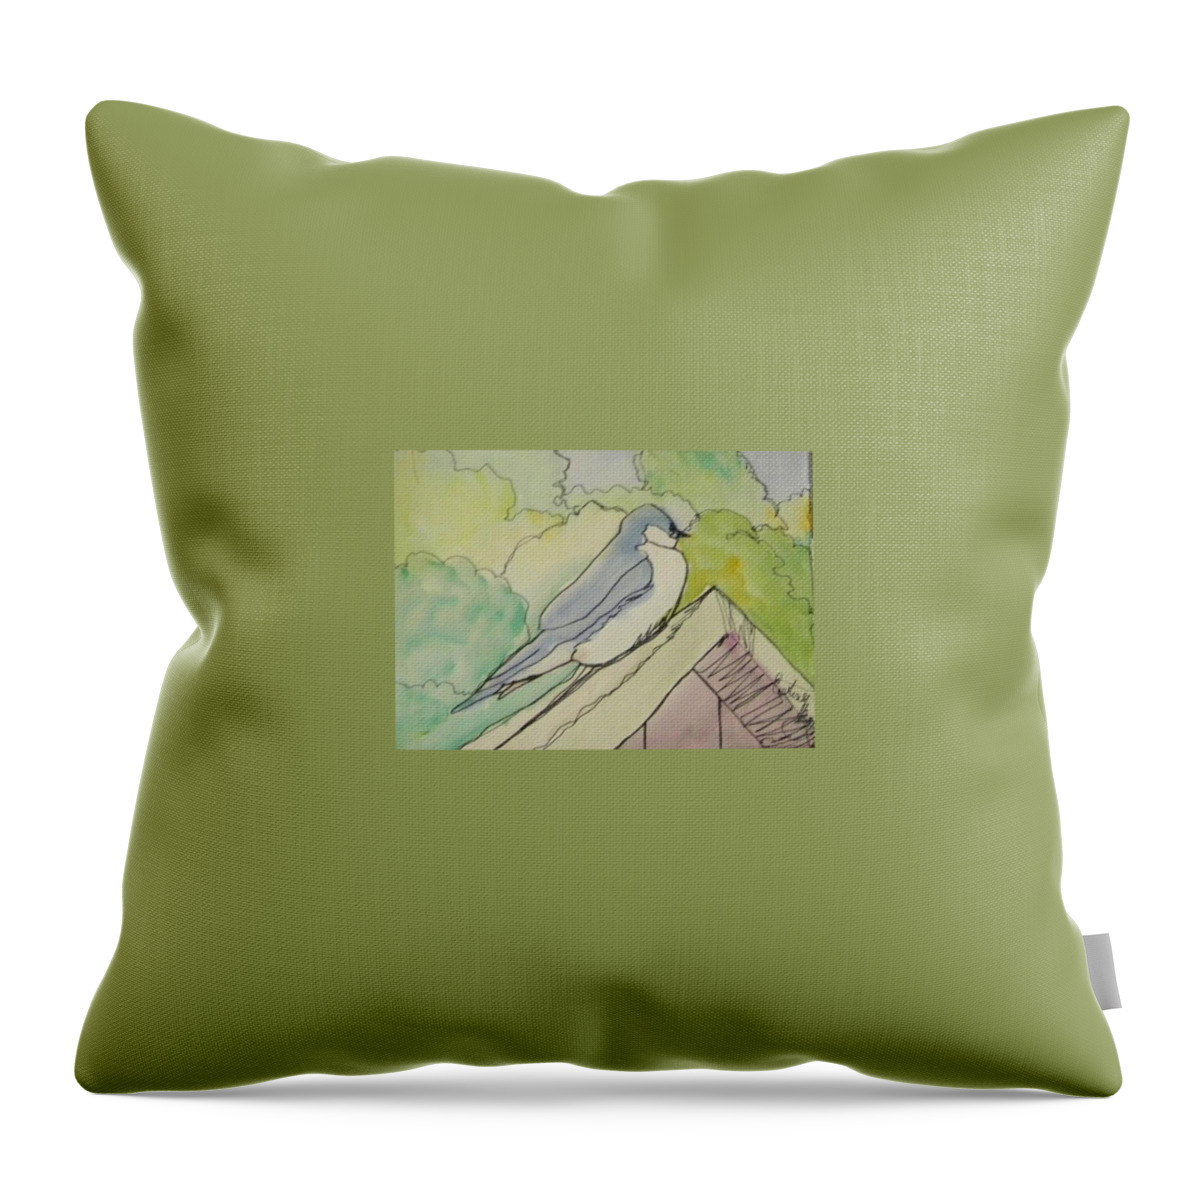 Bird Throw Pillow featuring the painting Bird Sketch by Caroline Henry